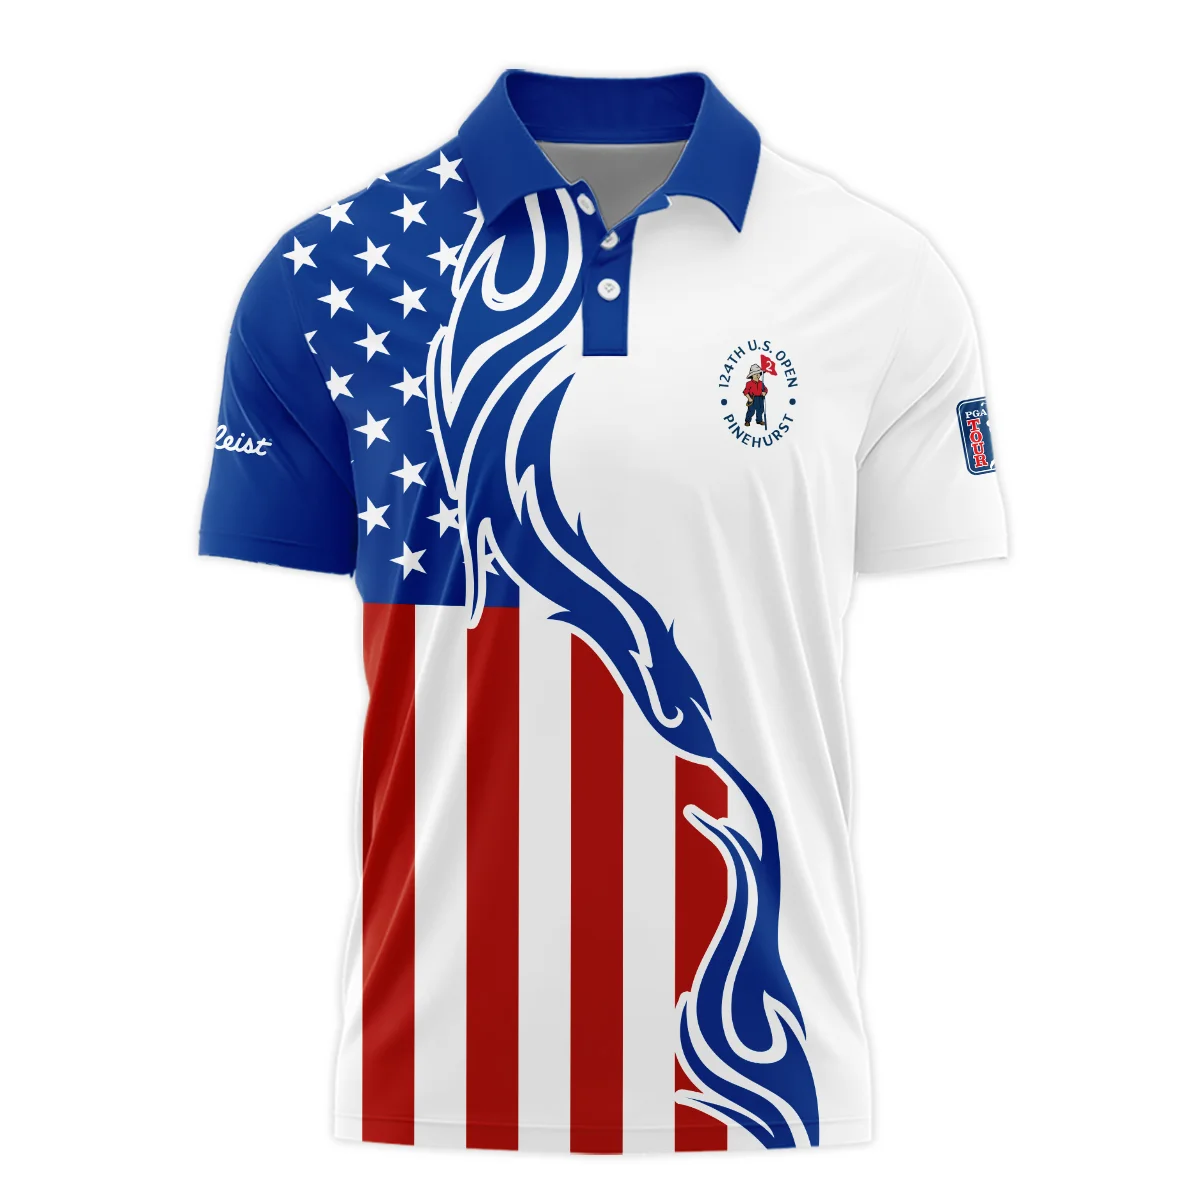 Golf Sport Titleist 124th U.S. Open Pinehurst Polo Shirt USA Flag Pattern Blue White All Over Print Polo Shirt For Men